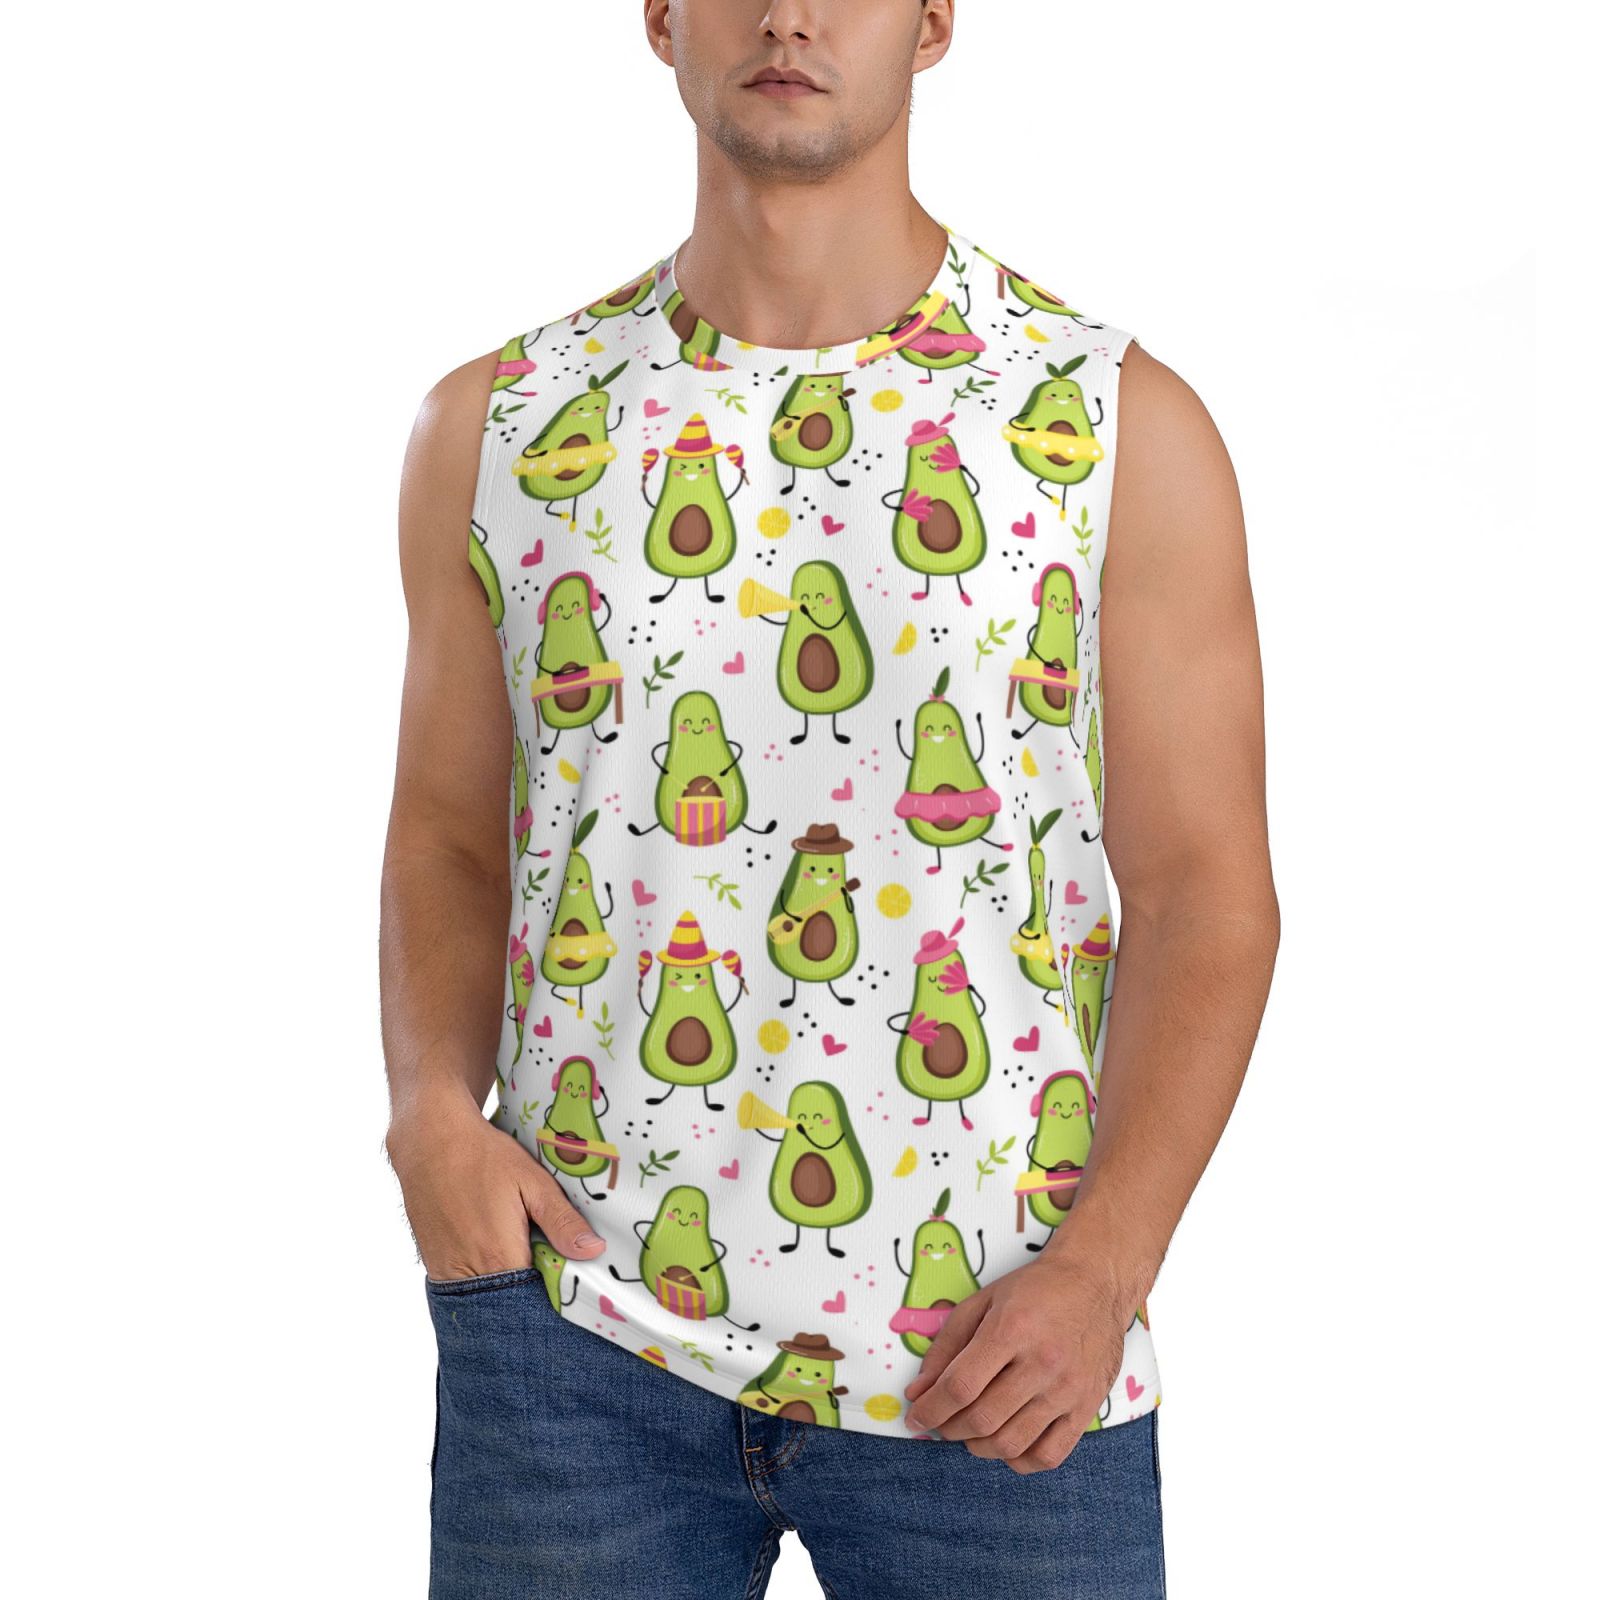 Disketp Avocado Playing Music Sleeveless Tshirts For Men, Muscle Shirts ...